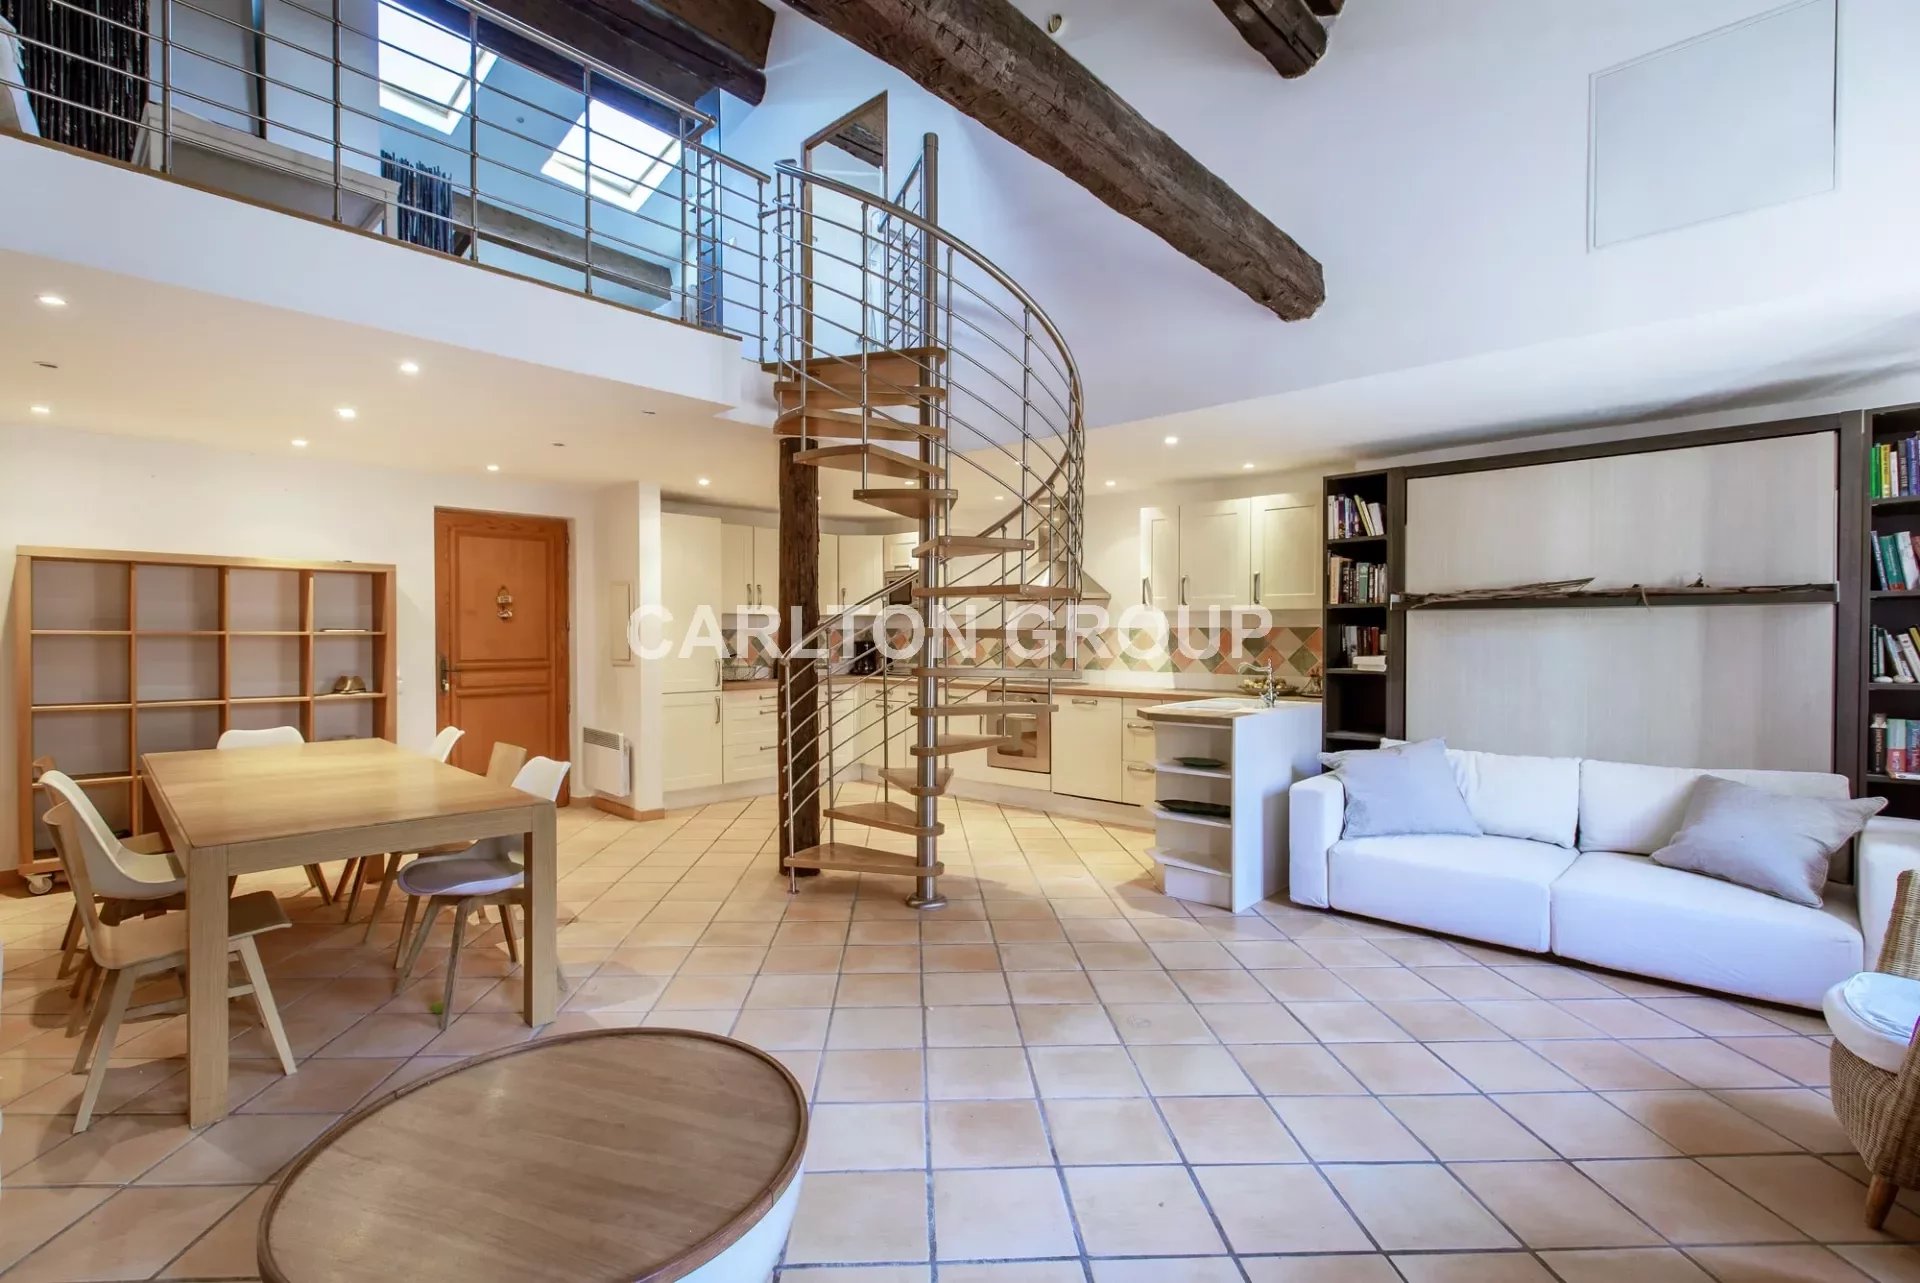 A 1 Bedroom Luxury Apartment In Villefranche Sur Mer